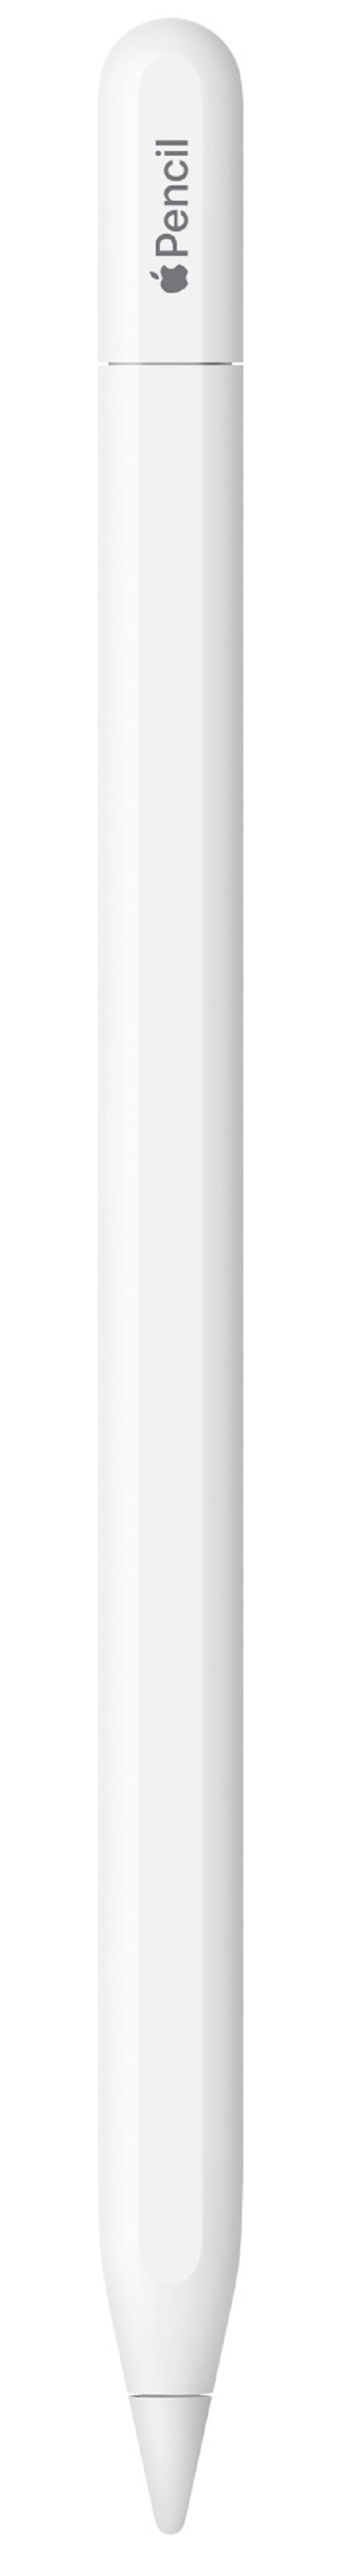 Apple Pencil USB-C blanc